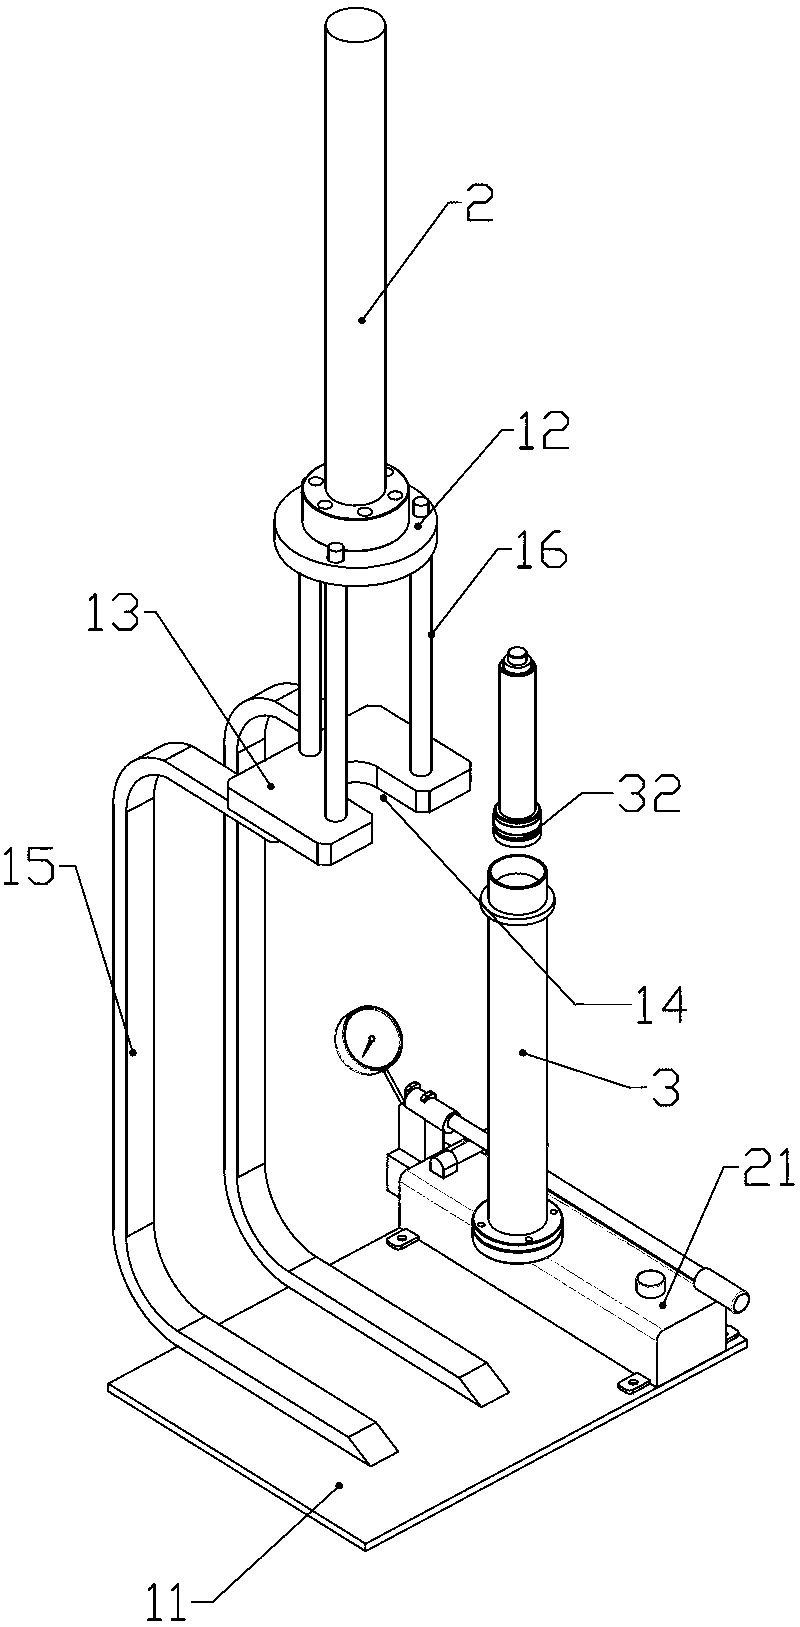 Inner storage constant-pressure preparative column device